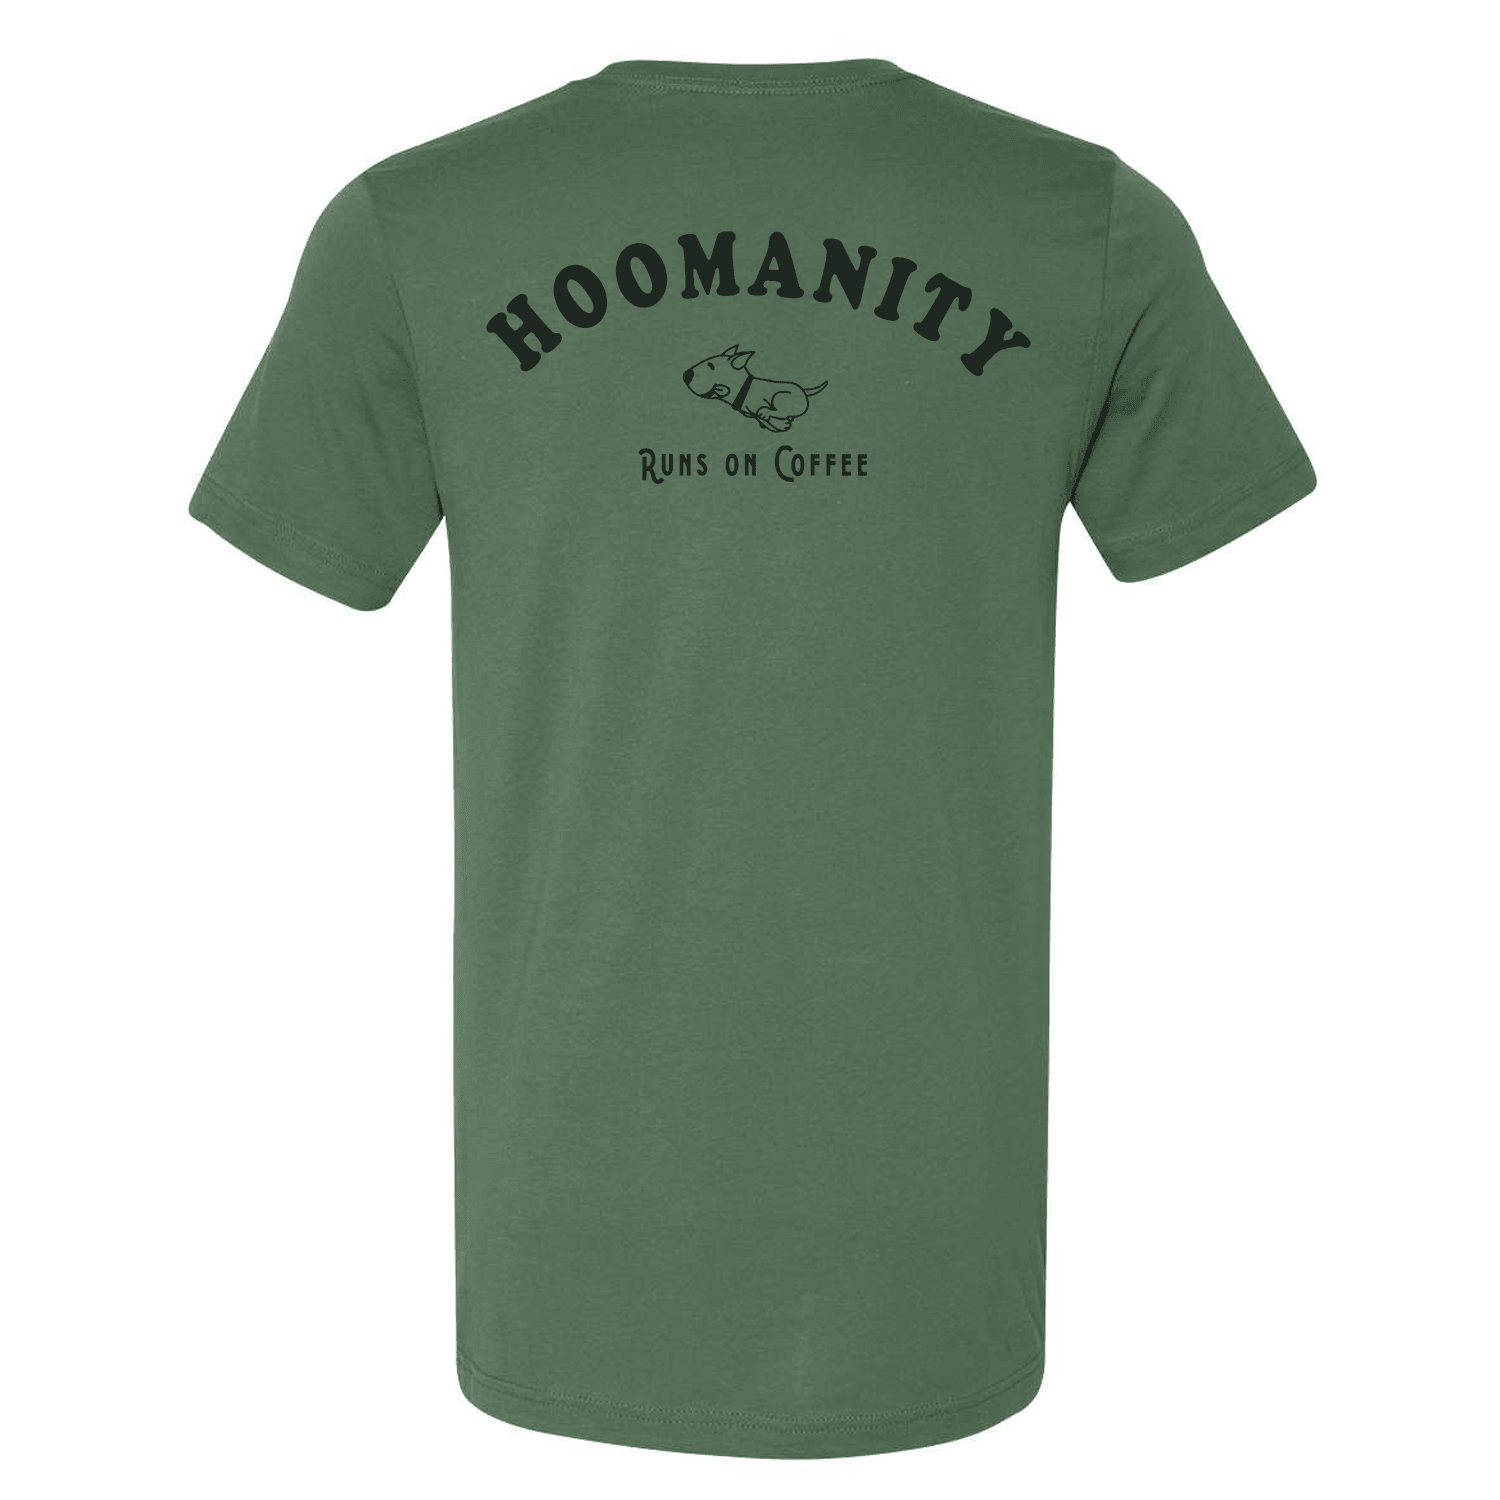 Hoppy Hound Coffee T-Shirt - Ales to Trails